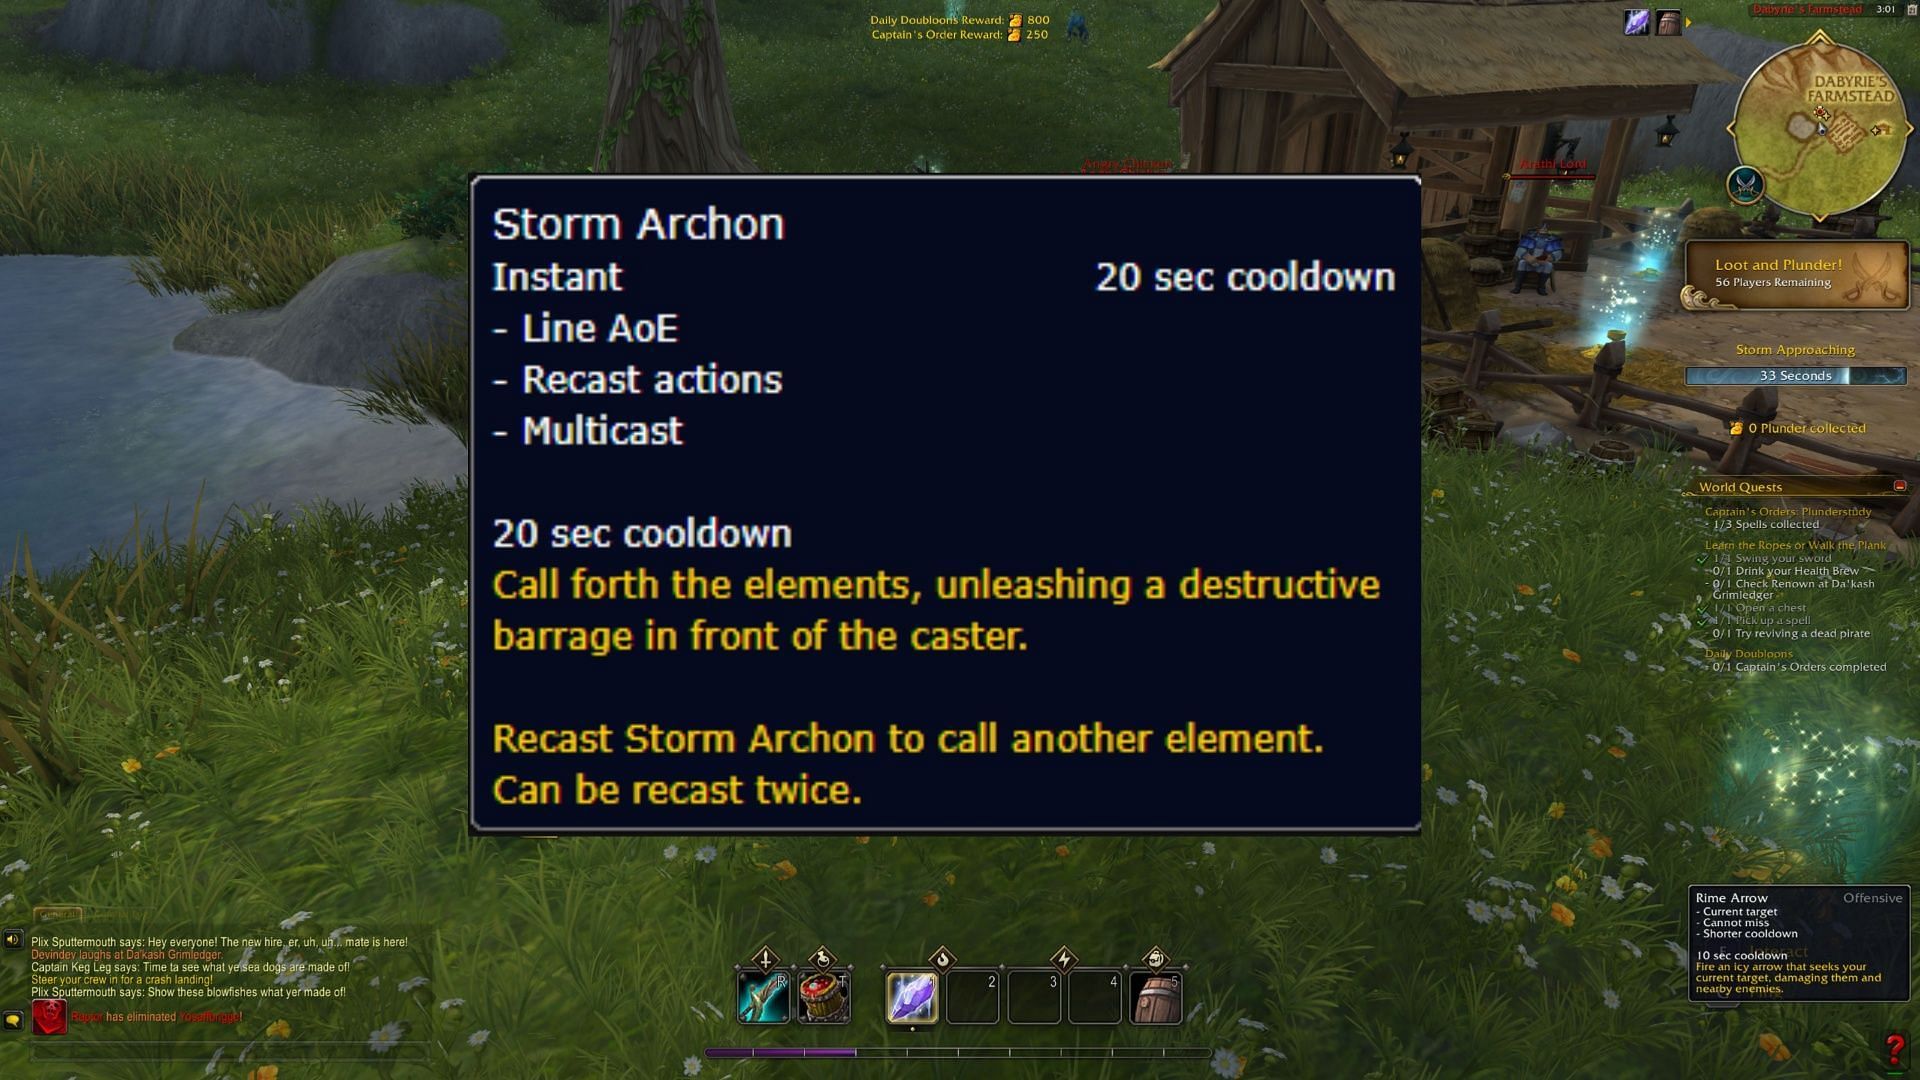 Storm Archon in WoW (Image via Blizzard Entertainment)